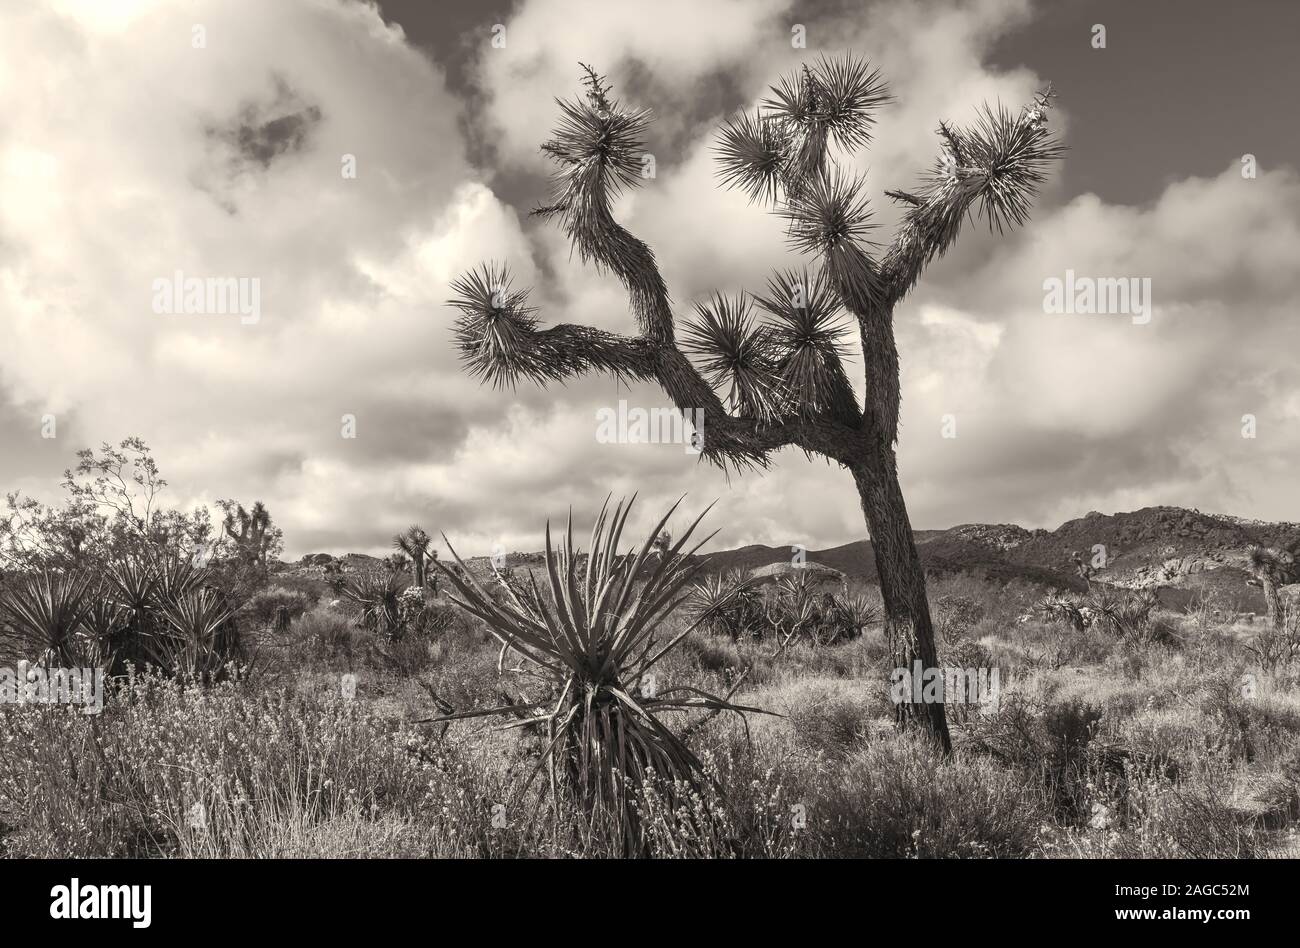 Joshua tree and the ecosystem at Joshua Tree National Park, California, USA, in black and white. Stock Photo